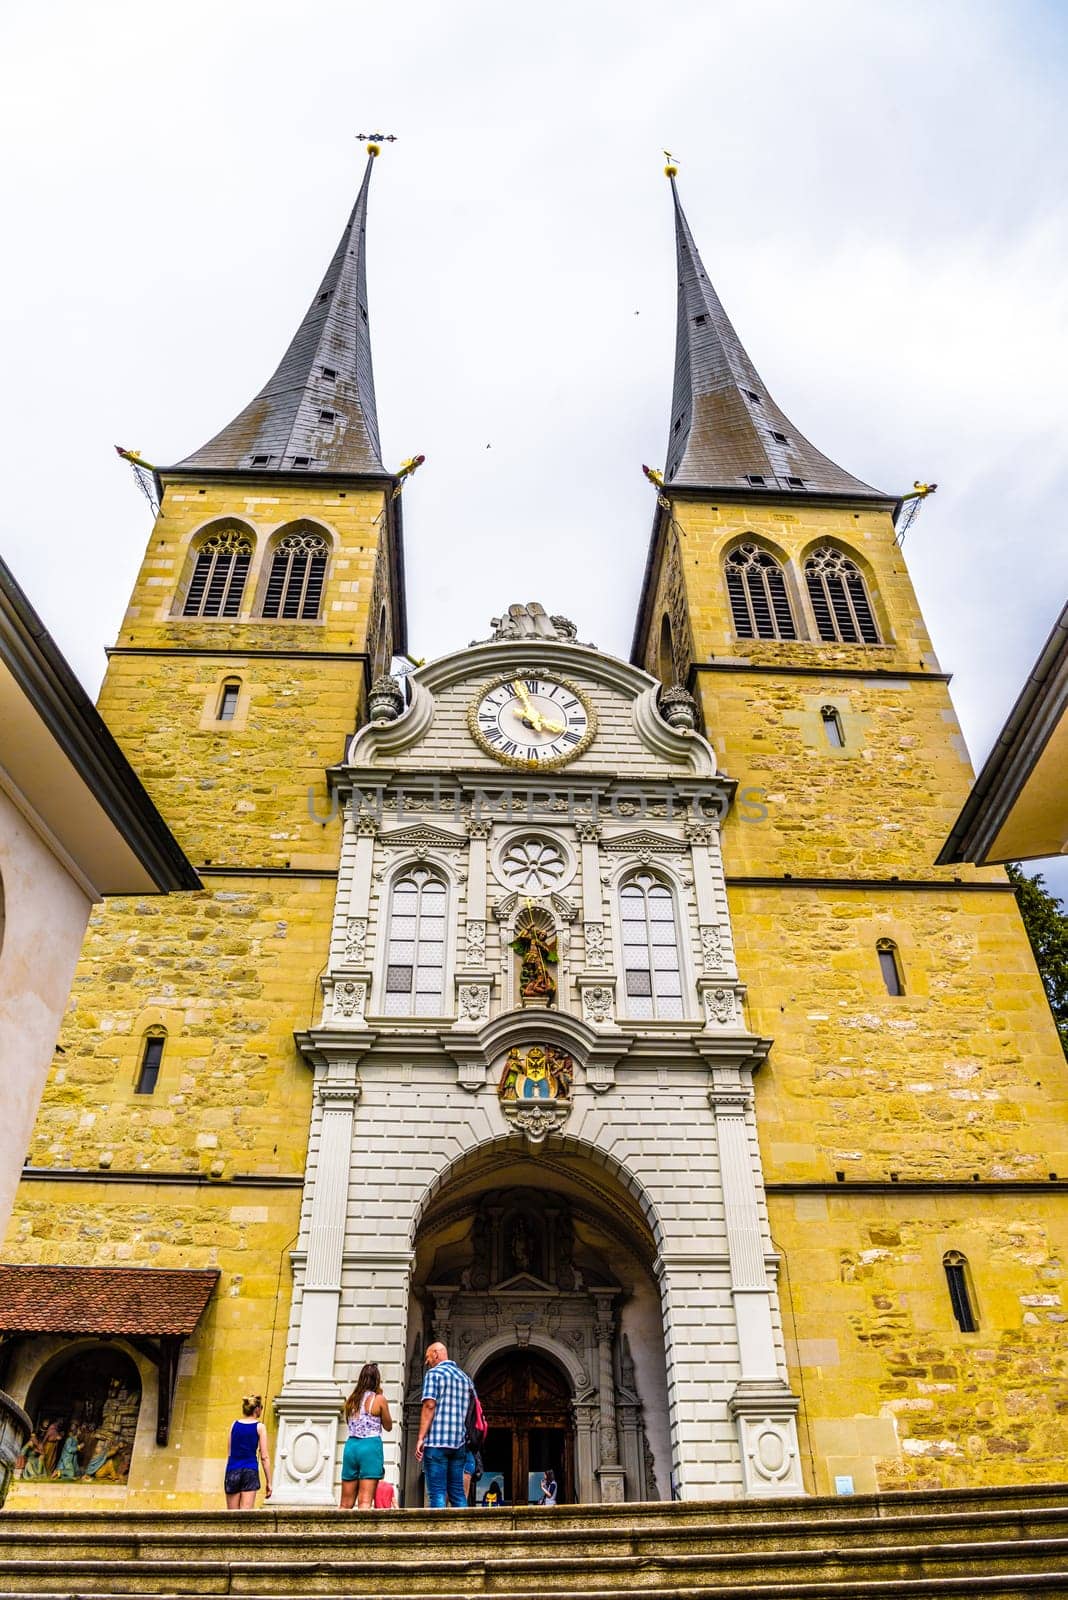 Hofkirche church St. Leodegar in the center of Lucerne, Luzern Switzerland by Eagle2308